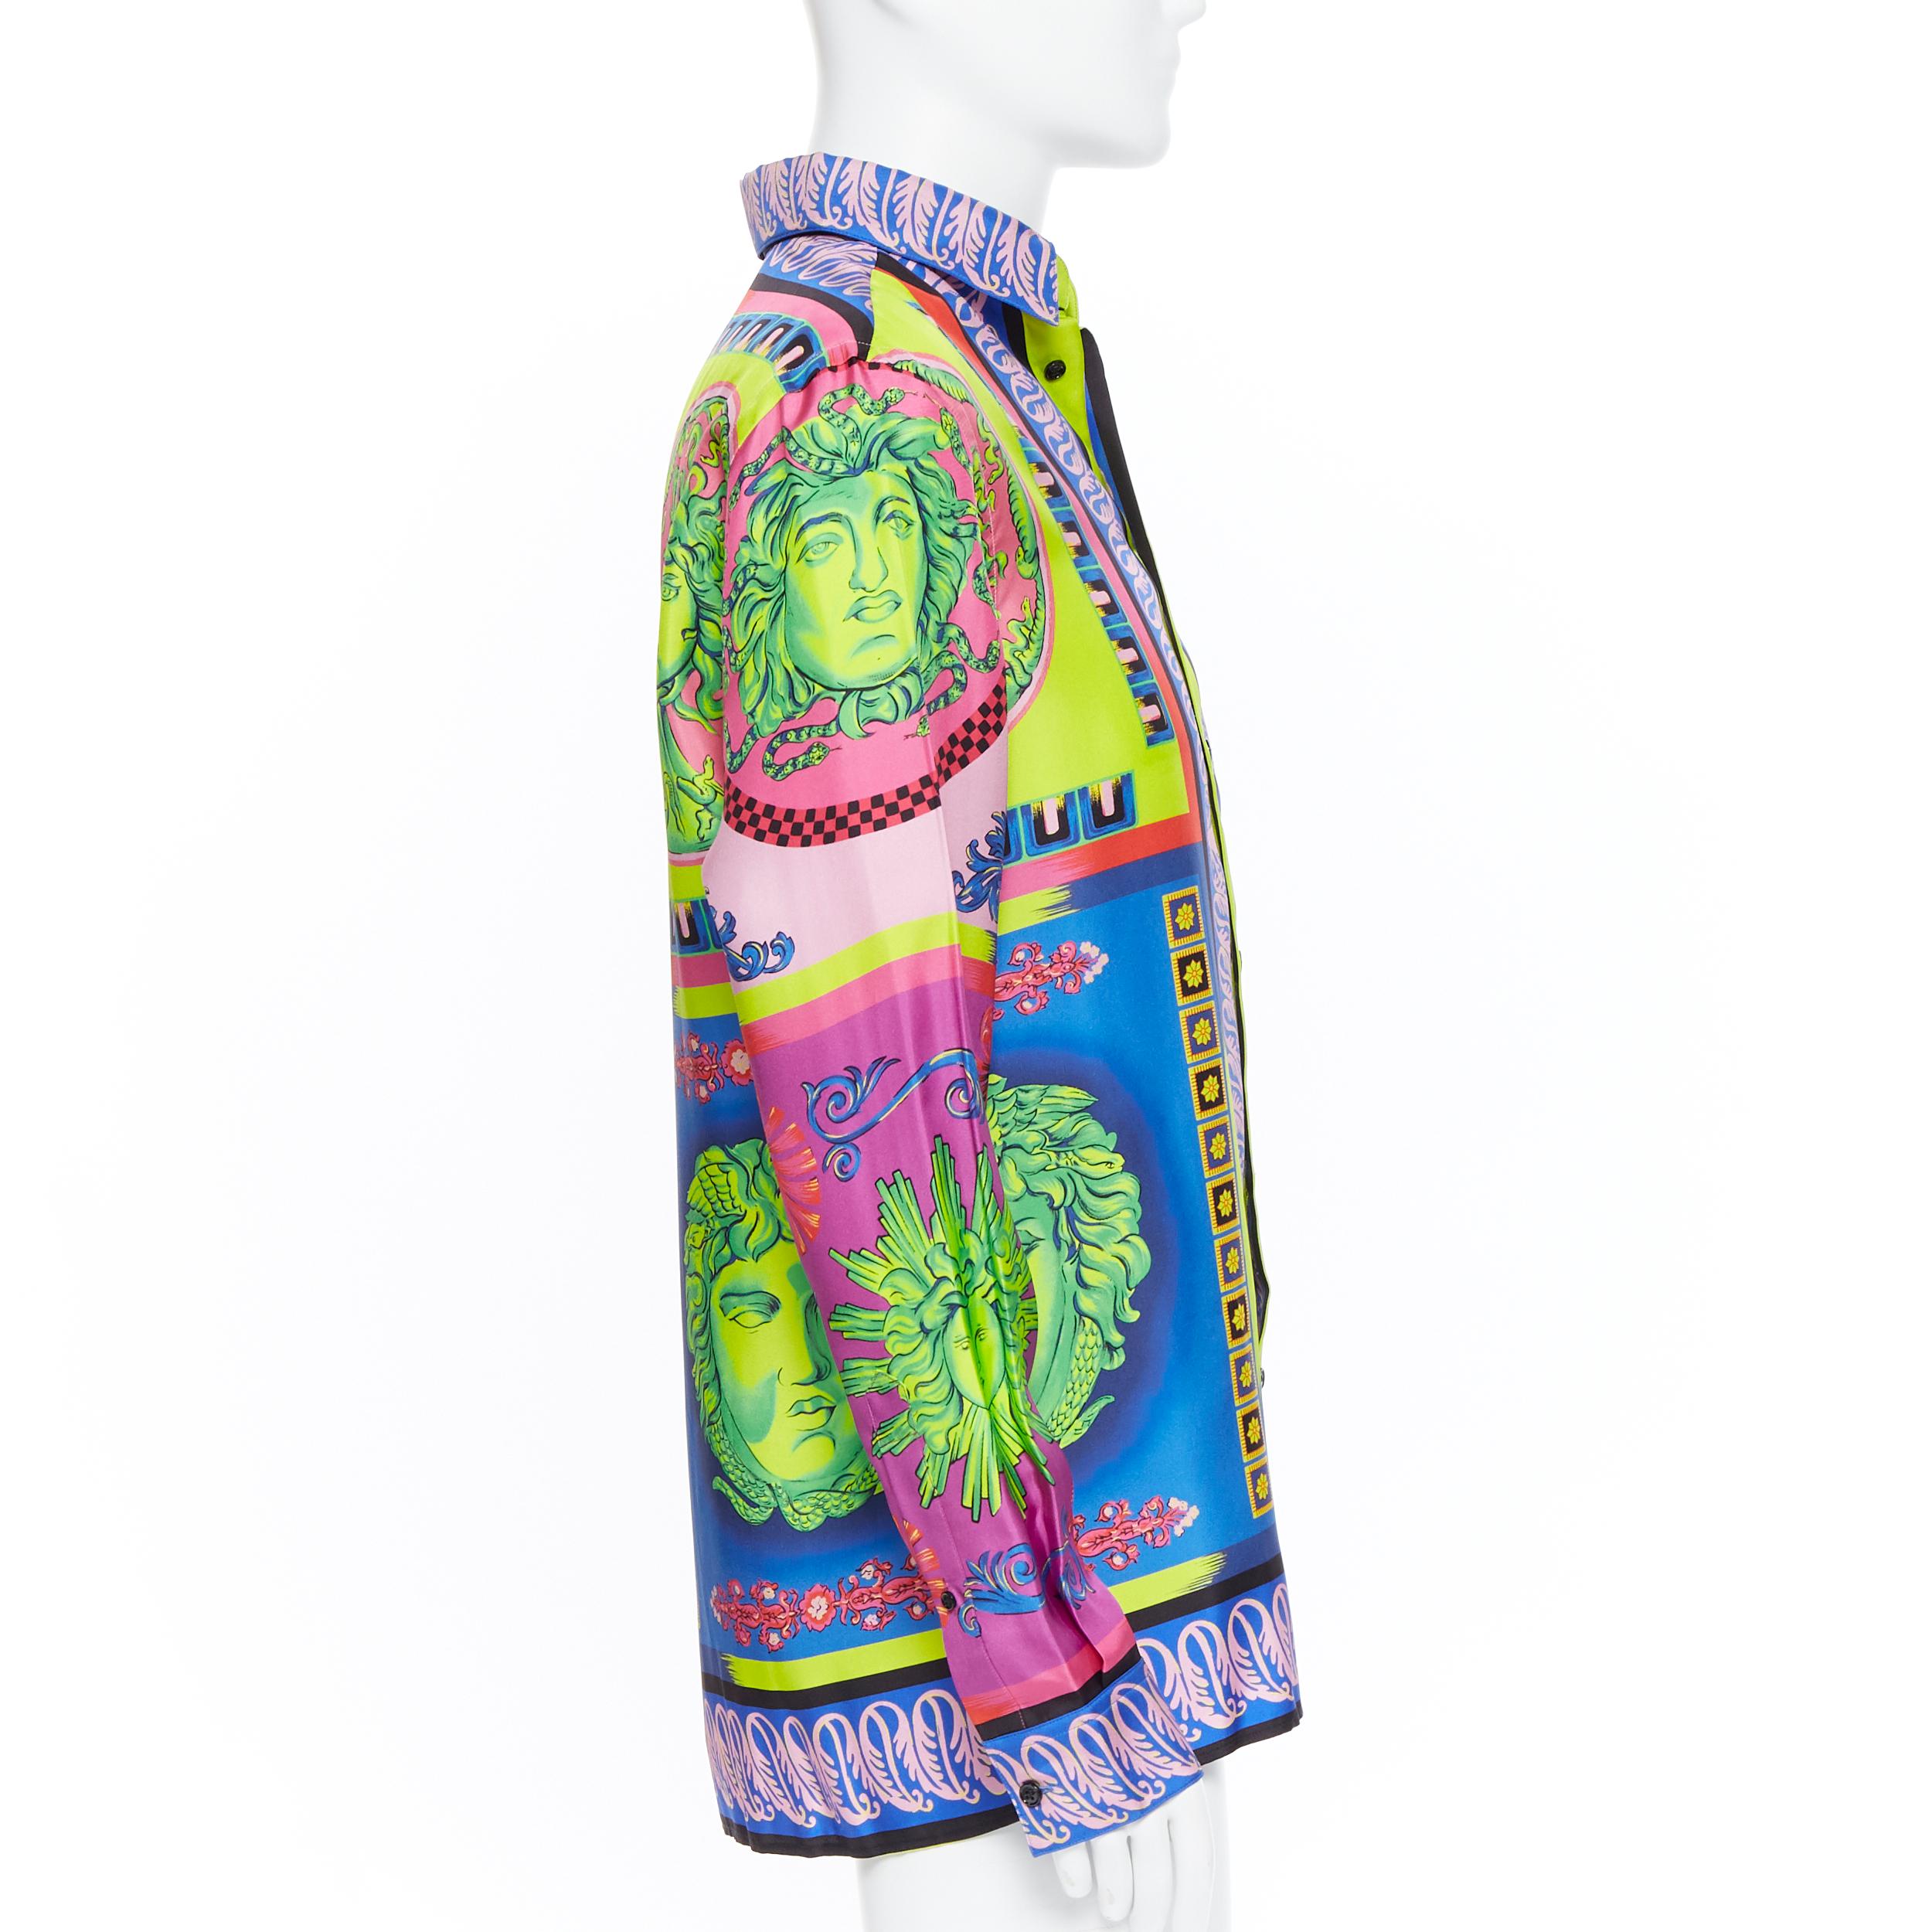 new VERSACE 2018 Runway Pop Foulard Medusa neon baroque 100% silk shirt EU40 L
Brand: Versace
Designer: Donatella Versace
Collection: Pre-fall 2018
Model Name / Style: Silk shirt
Material: Silk
Color: Multicolour
Pattern: Other
Closure: Button
Extra